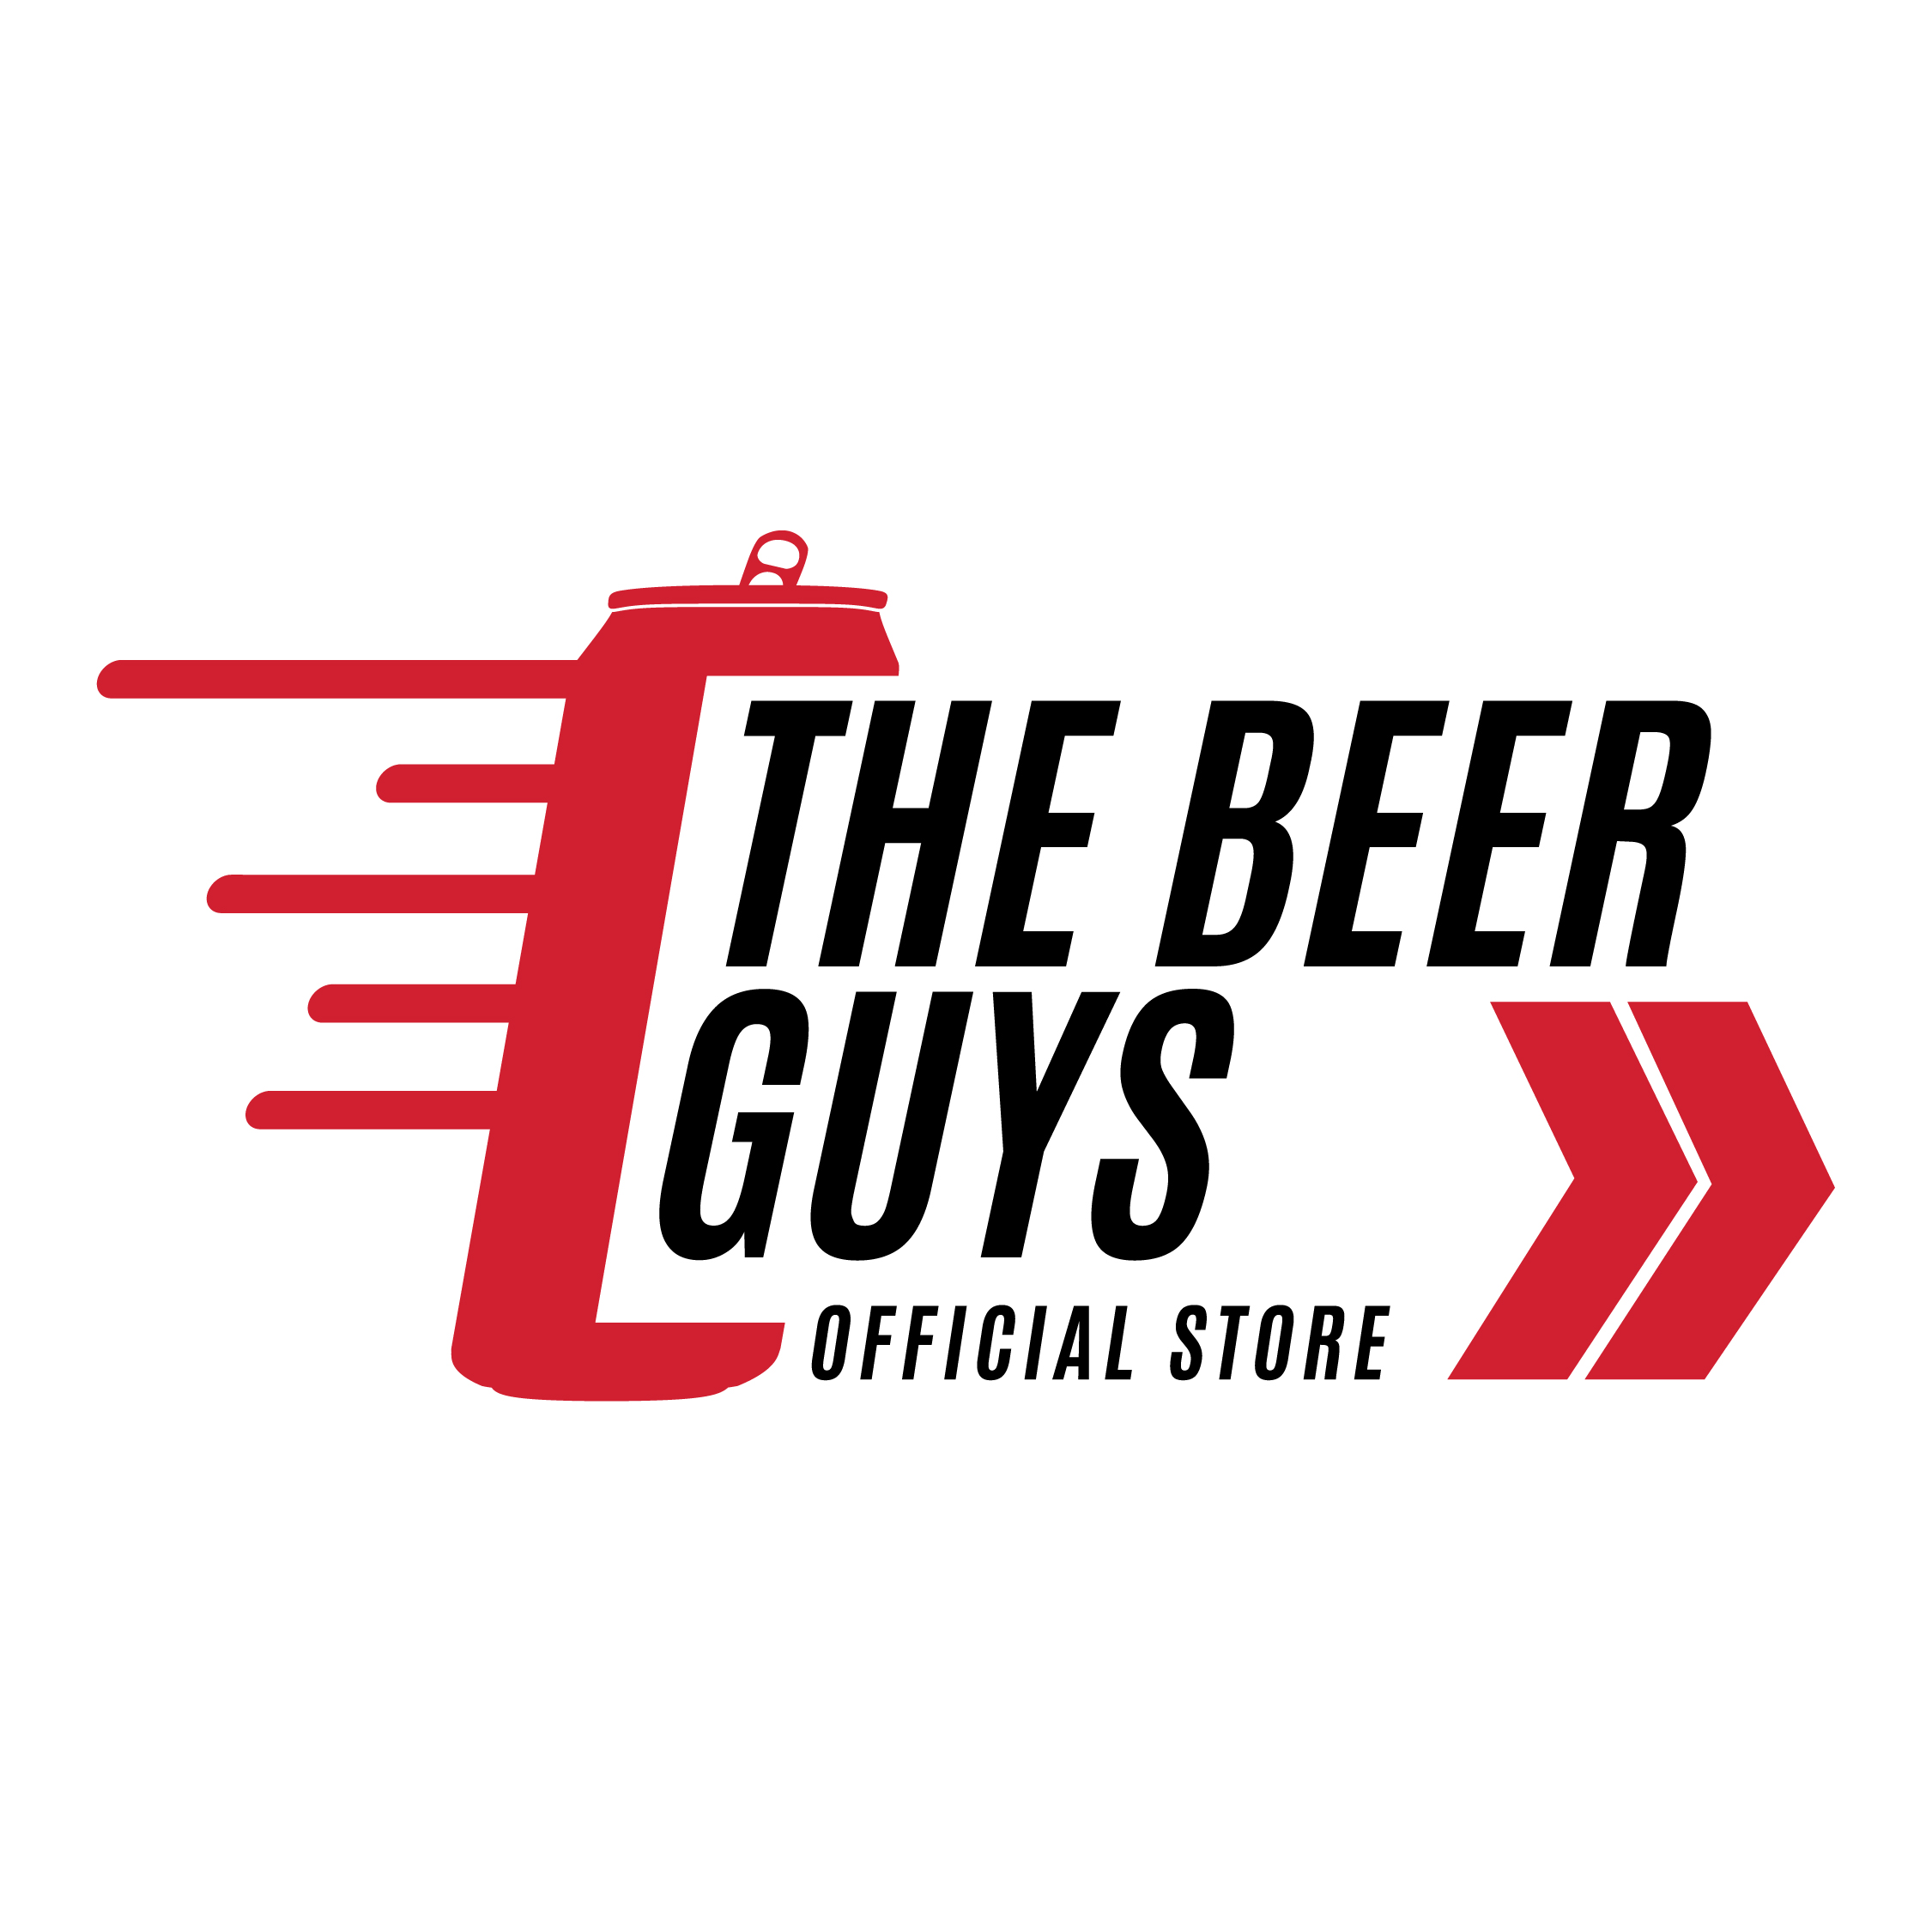 The Beer Guys Surabaya Official Store